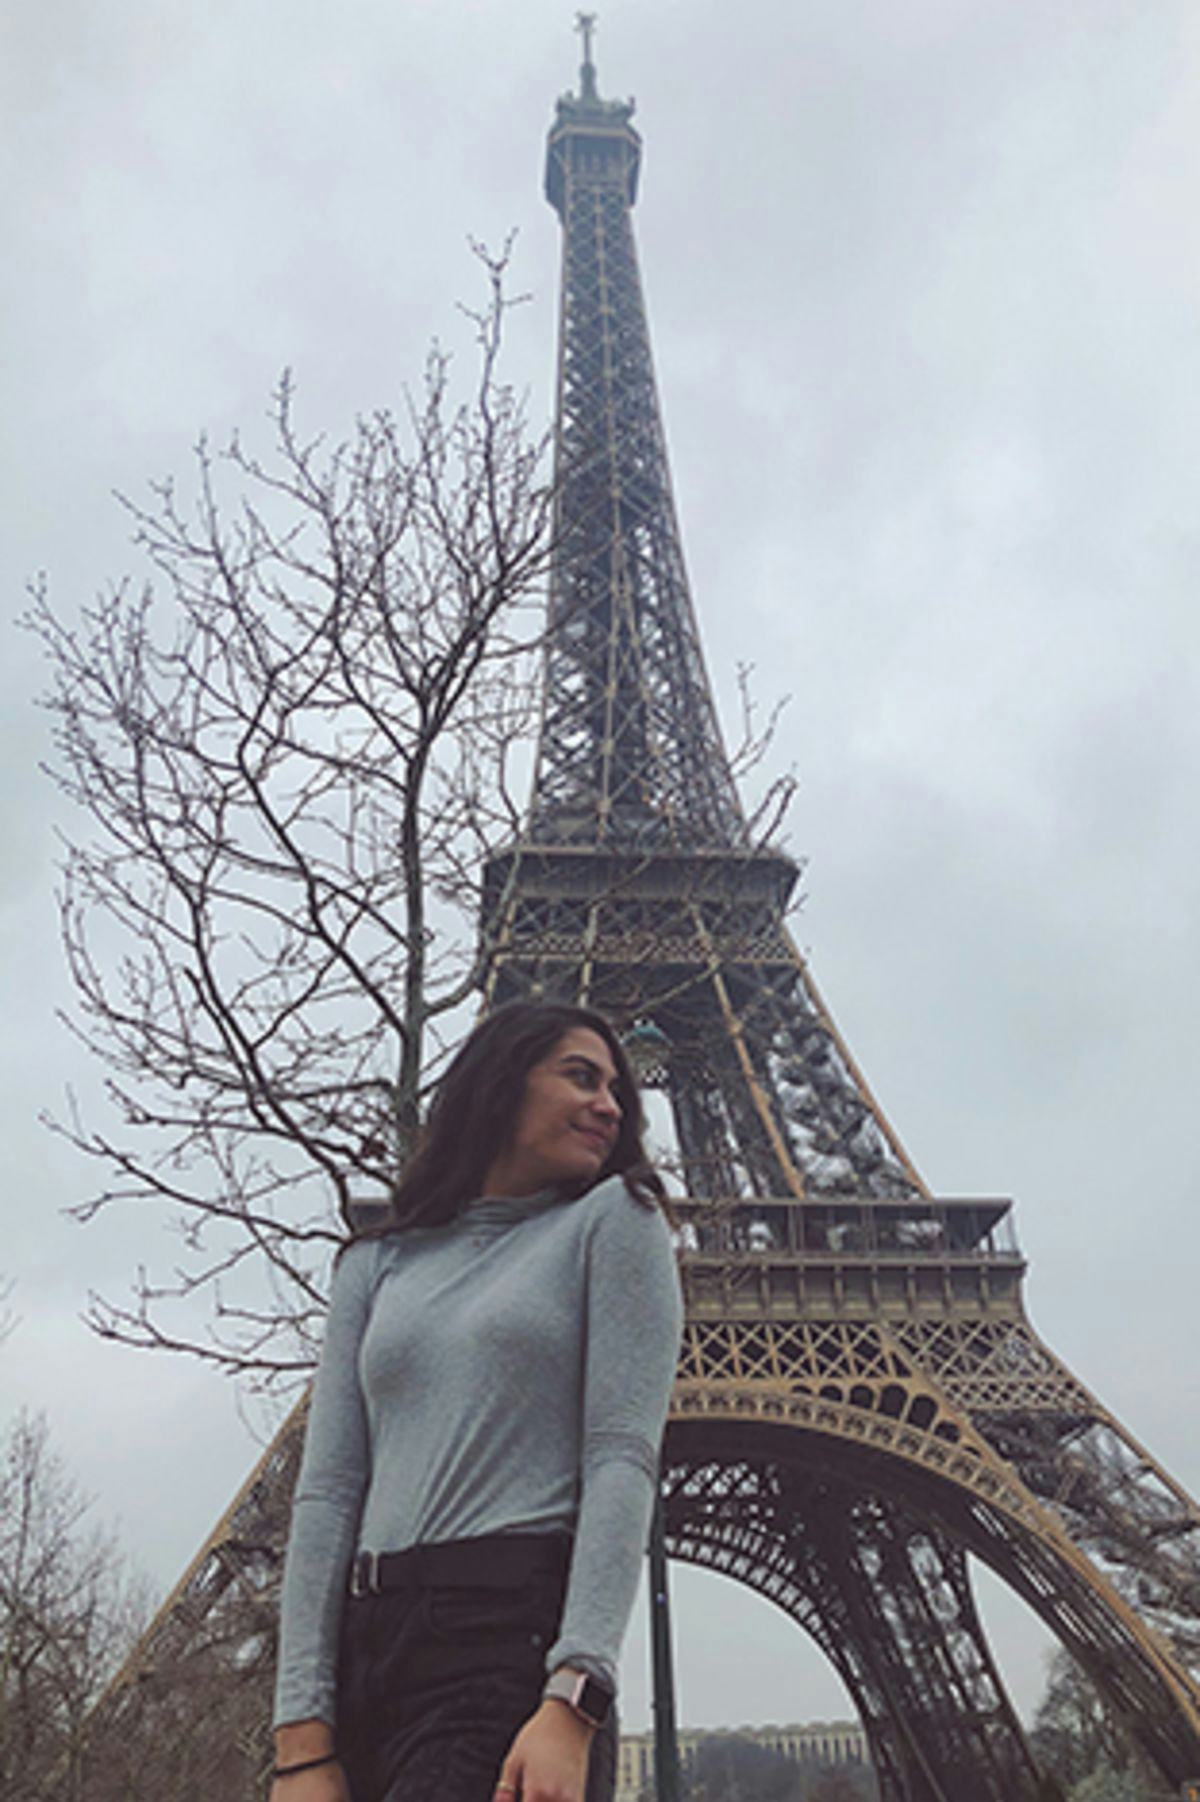 Sheila outside the Eiffel Tower in Paris.